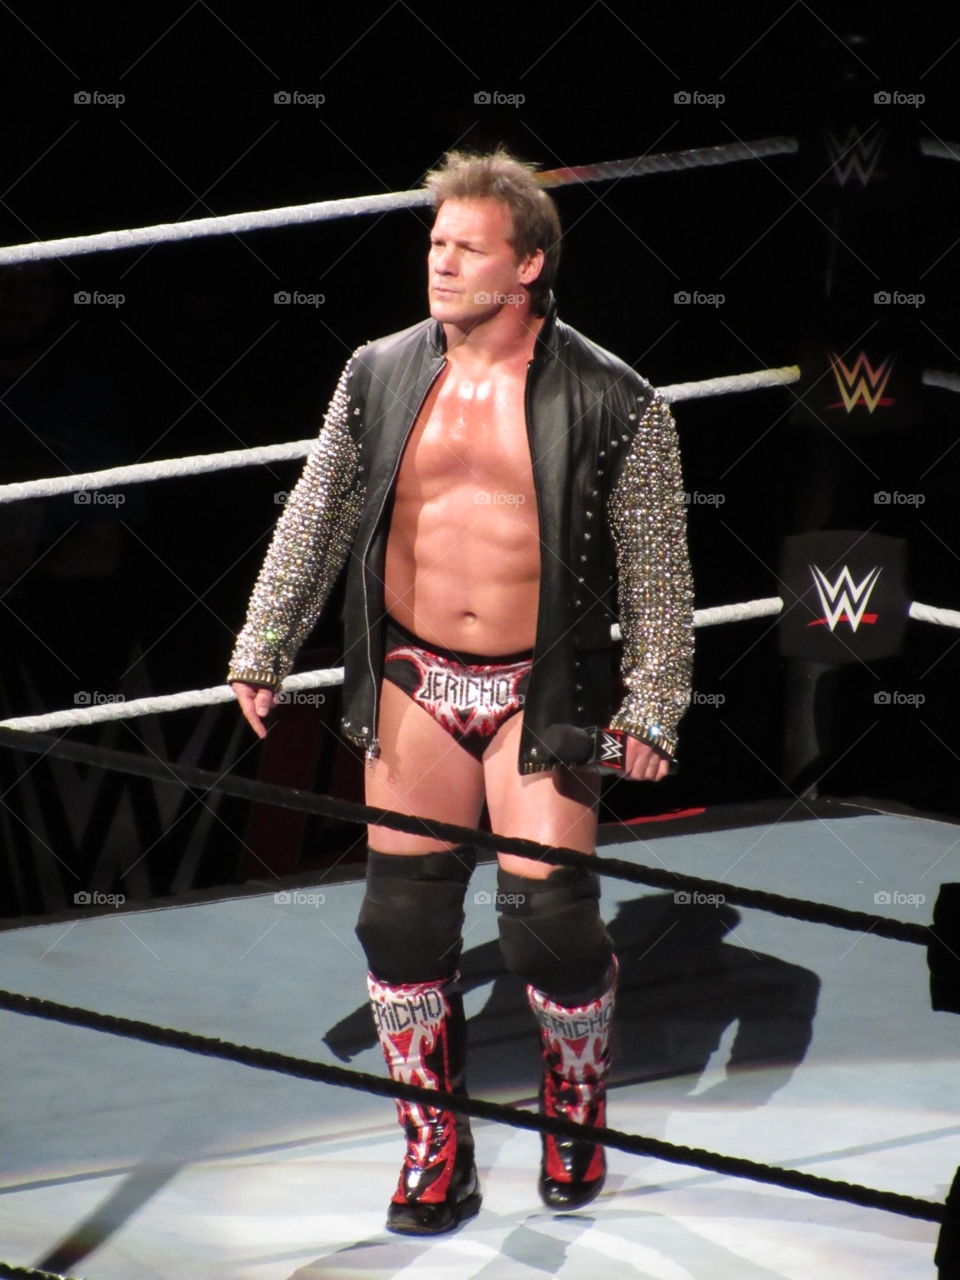 Chris Jericho at a WWE show in Buffalo